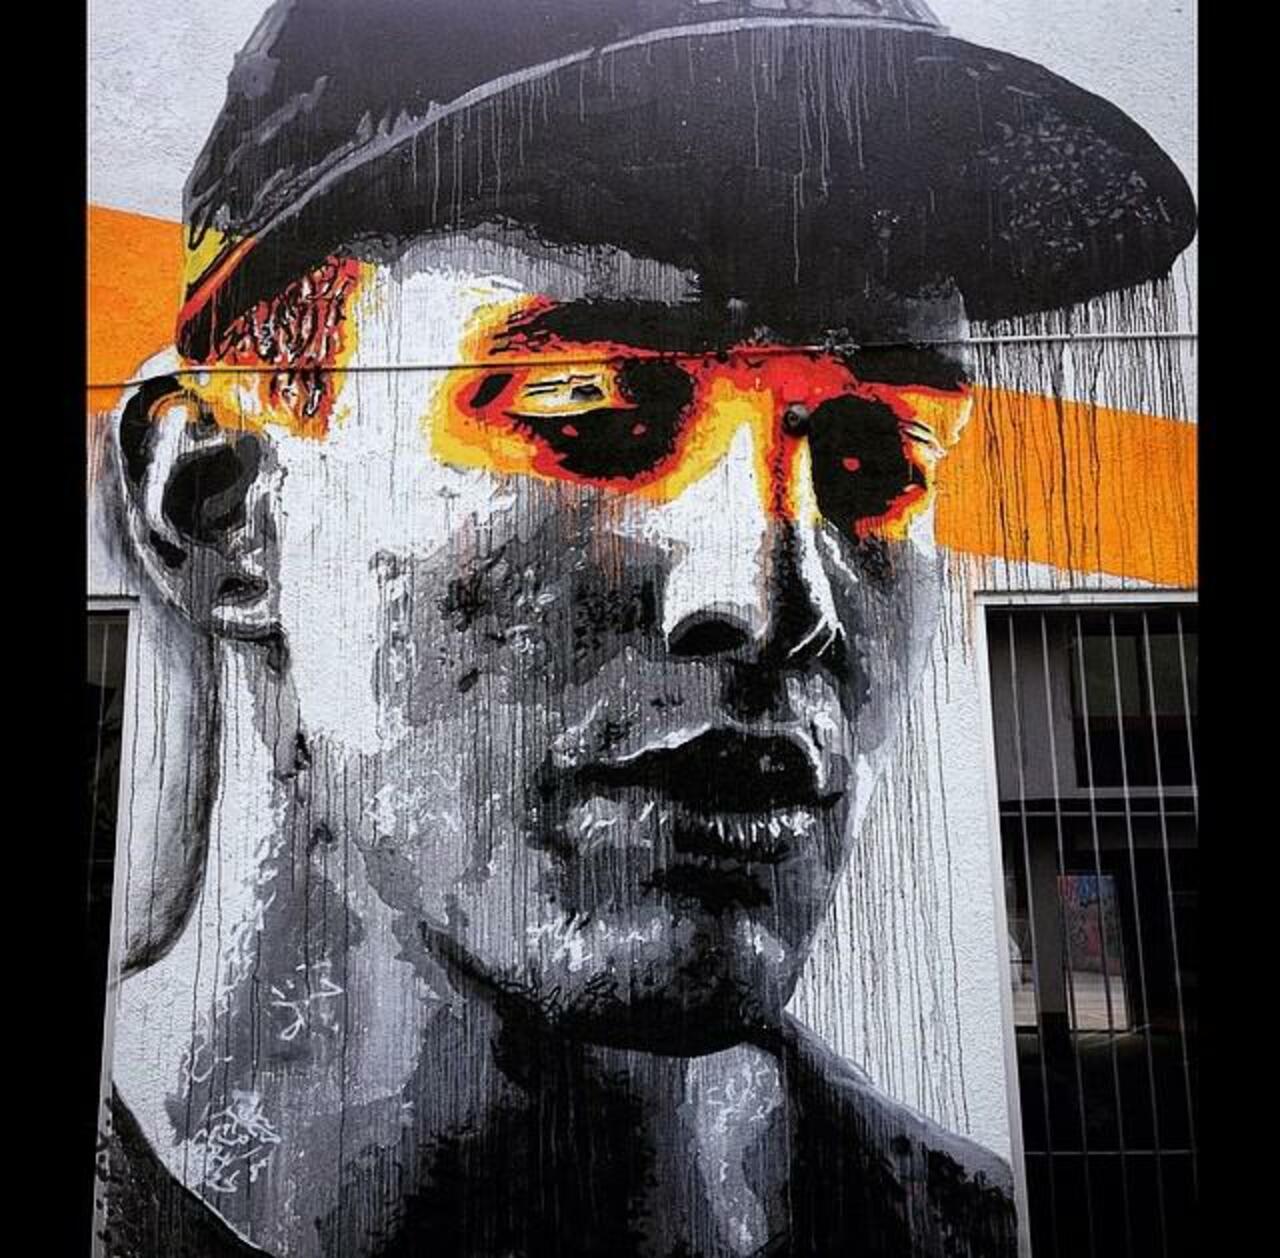 Artist Nils Westergard Street Art portrait in Miami 

#art #graffiti #mural #streetart http://t.co/r80JWShnHi From: GoogleStreetArt